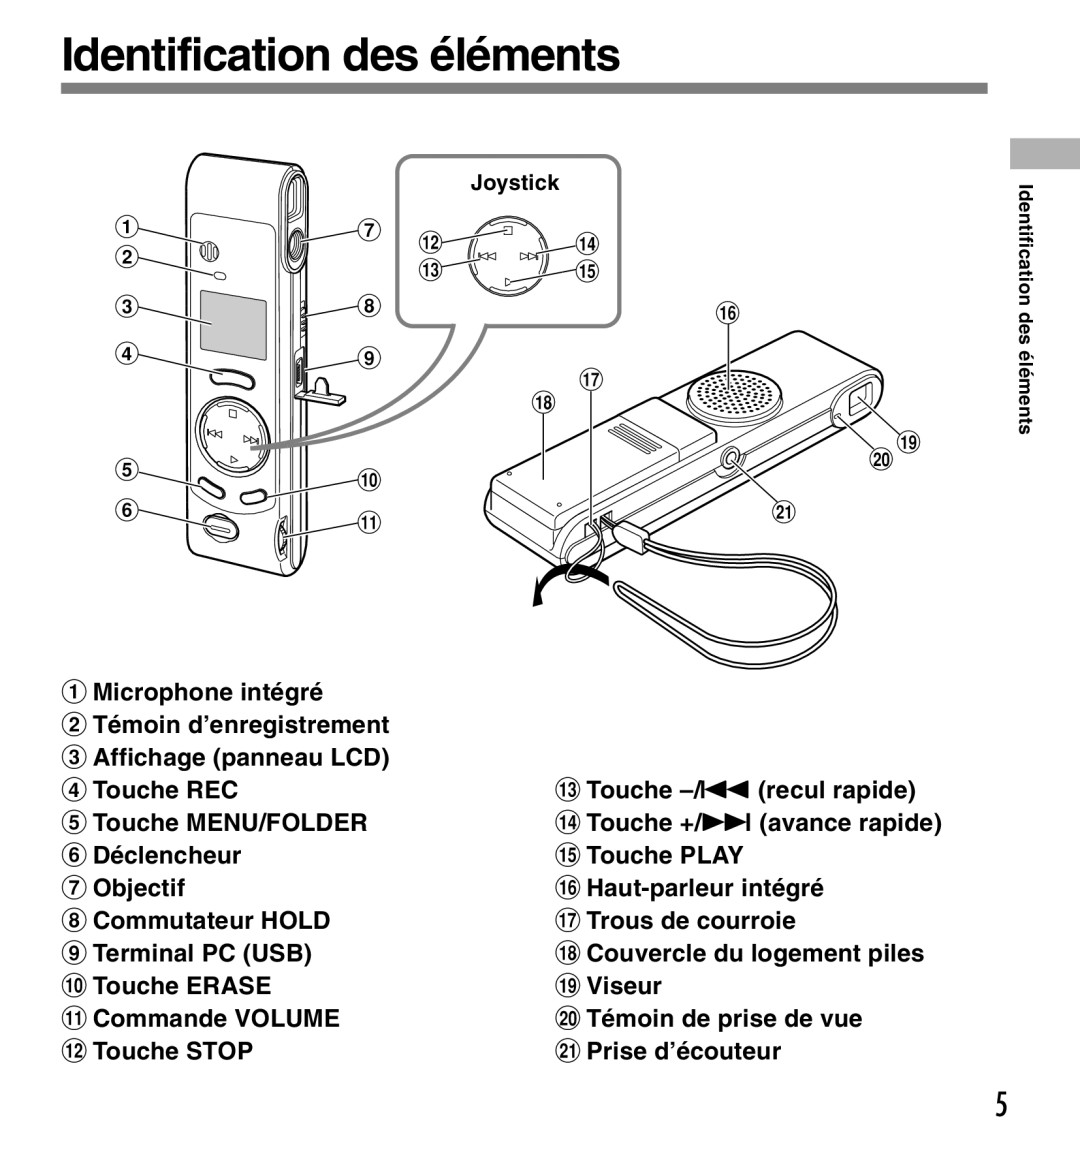 Olympus W-10 manual Identification des éléments, Joystick, Identification des Élé ments 